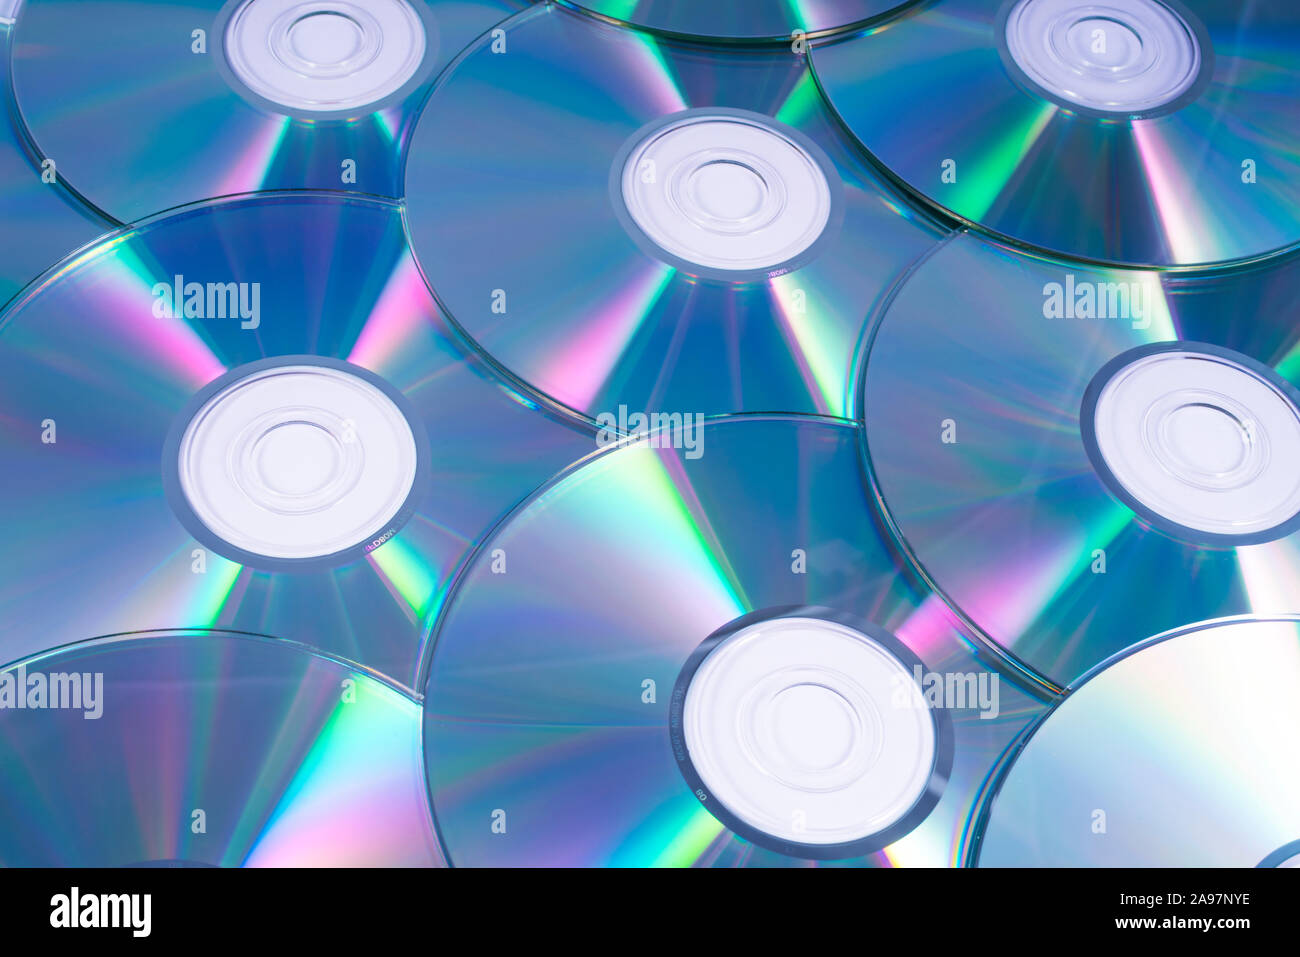 Digital versatile disc Cut Out Stock Images & Pictures - Alamy